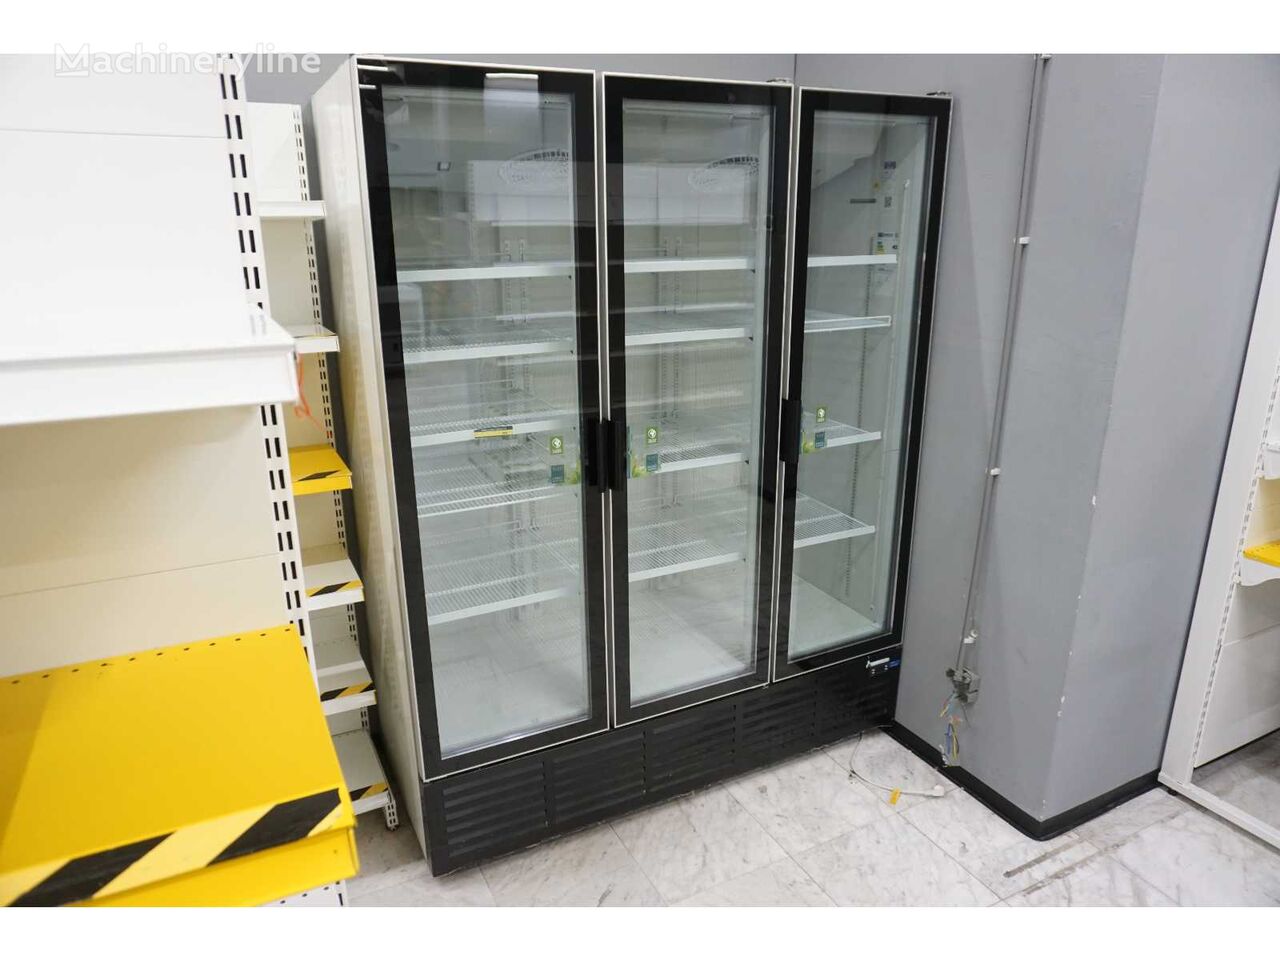 Ecocold EC90117 commercial refrigerator